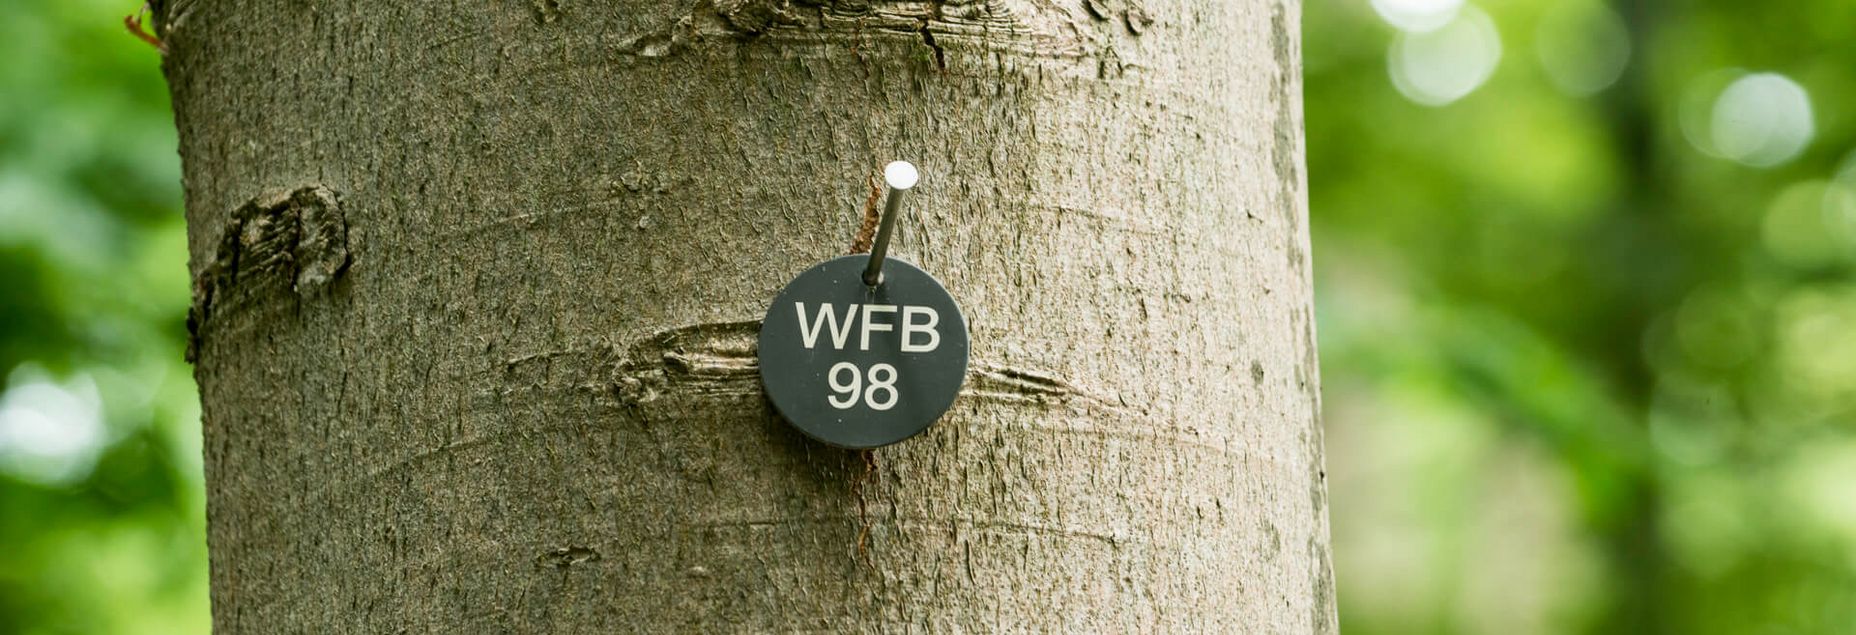 FriedWald-Onlineshop WFB 98